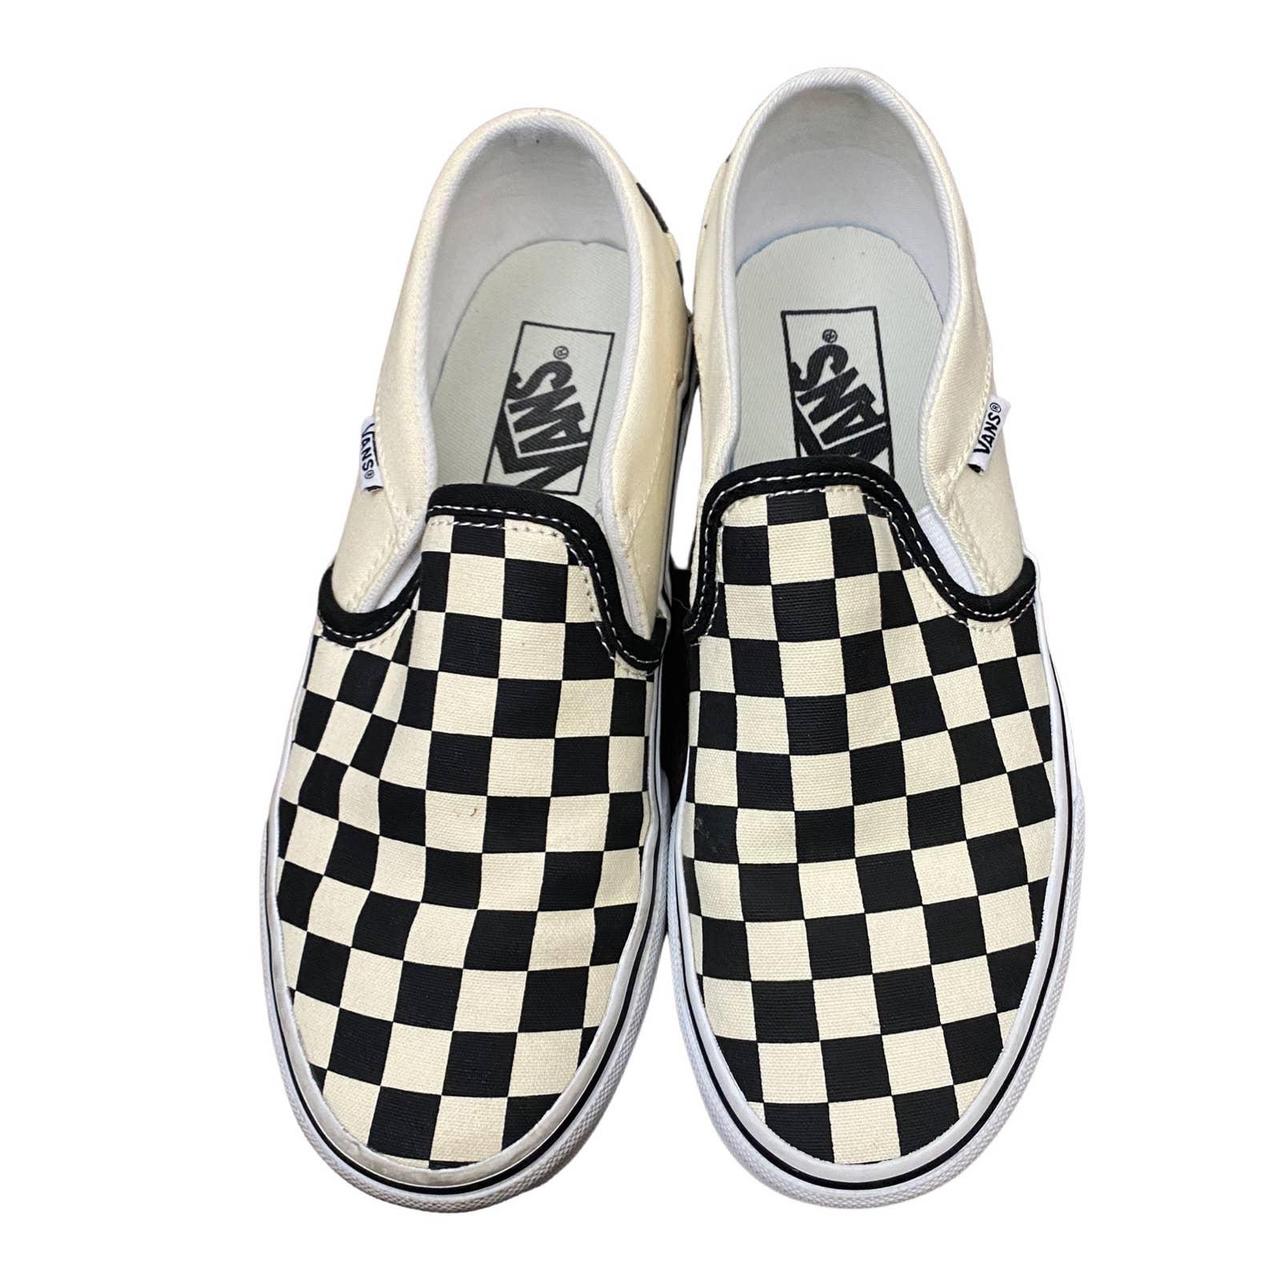 Black and White Checkered Vans Skate Shoes / Women’s... - Depop